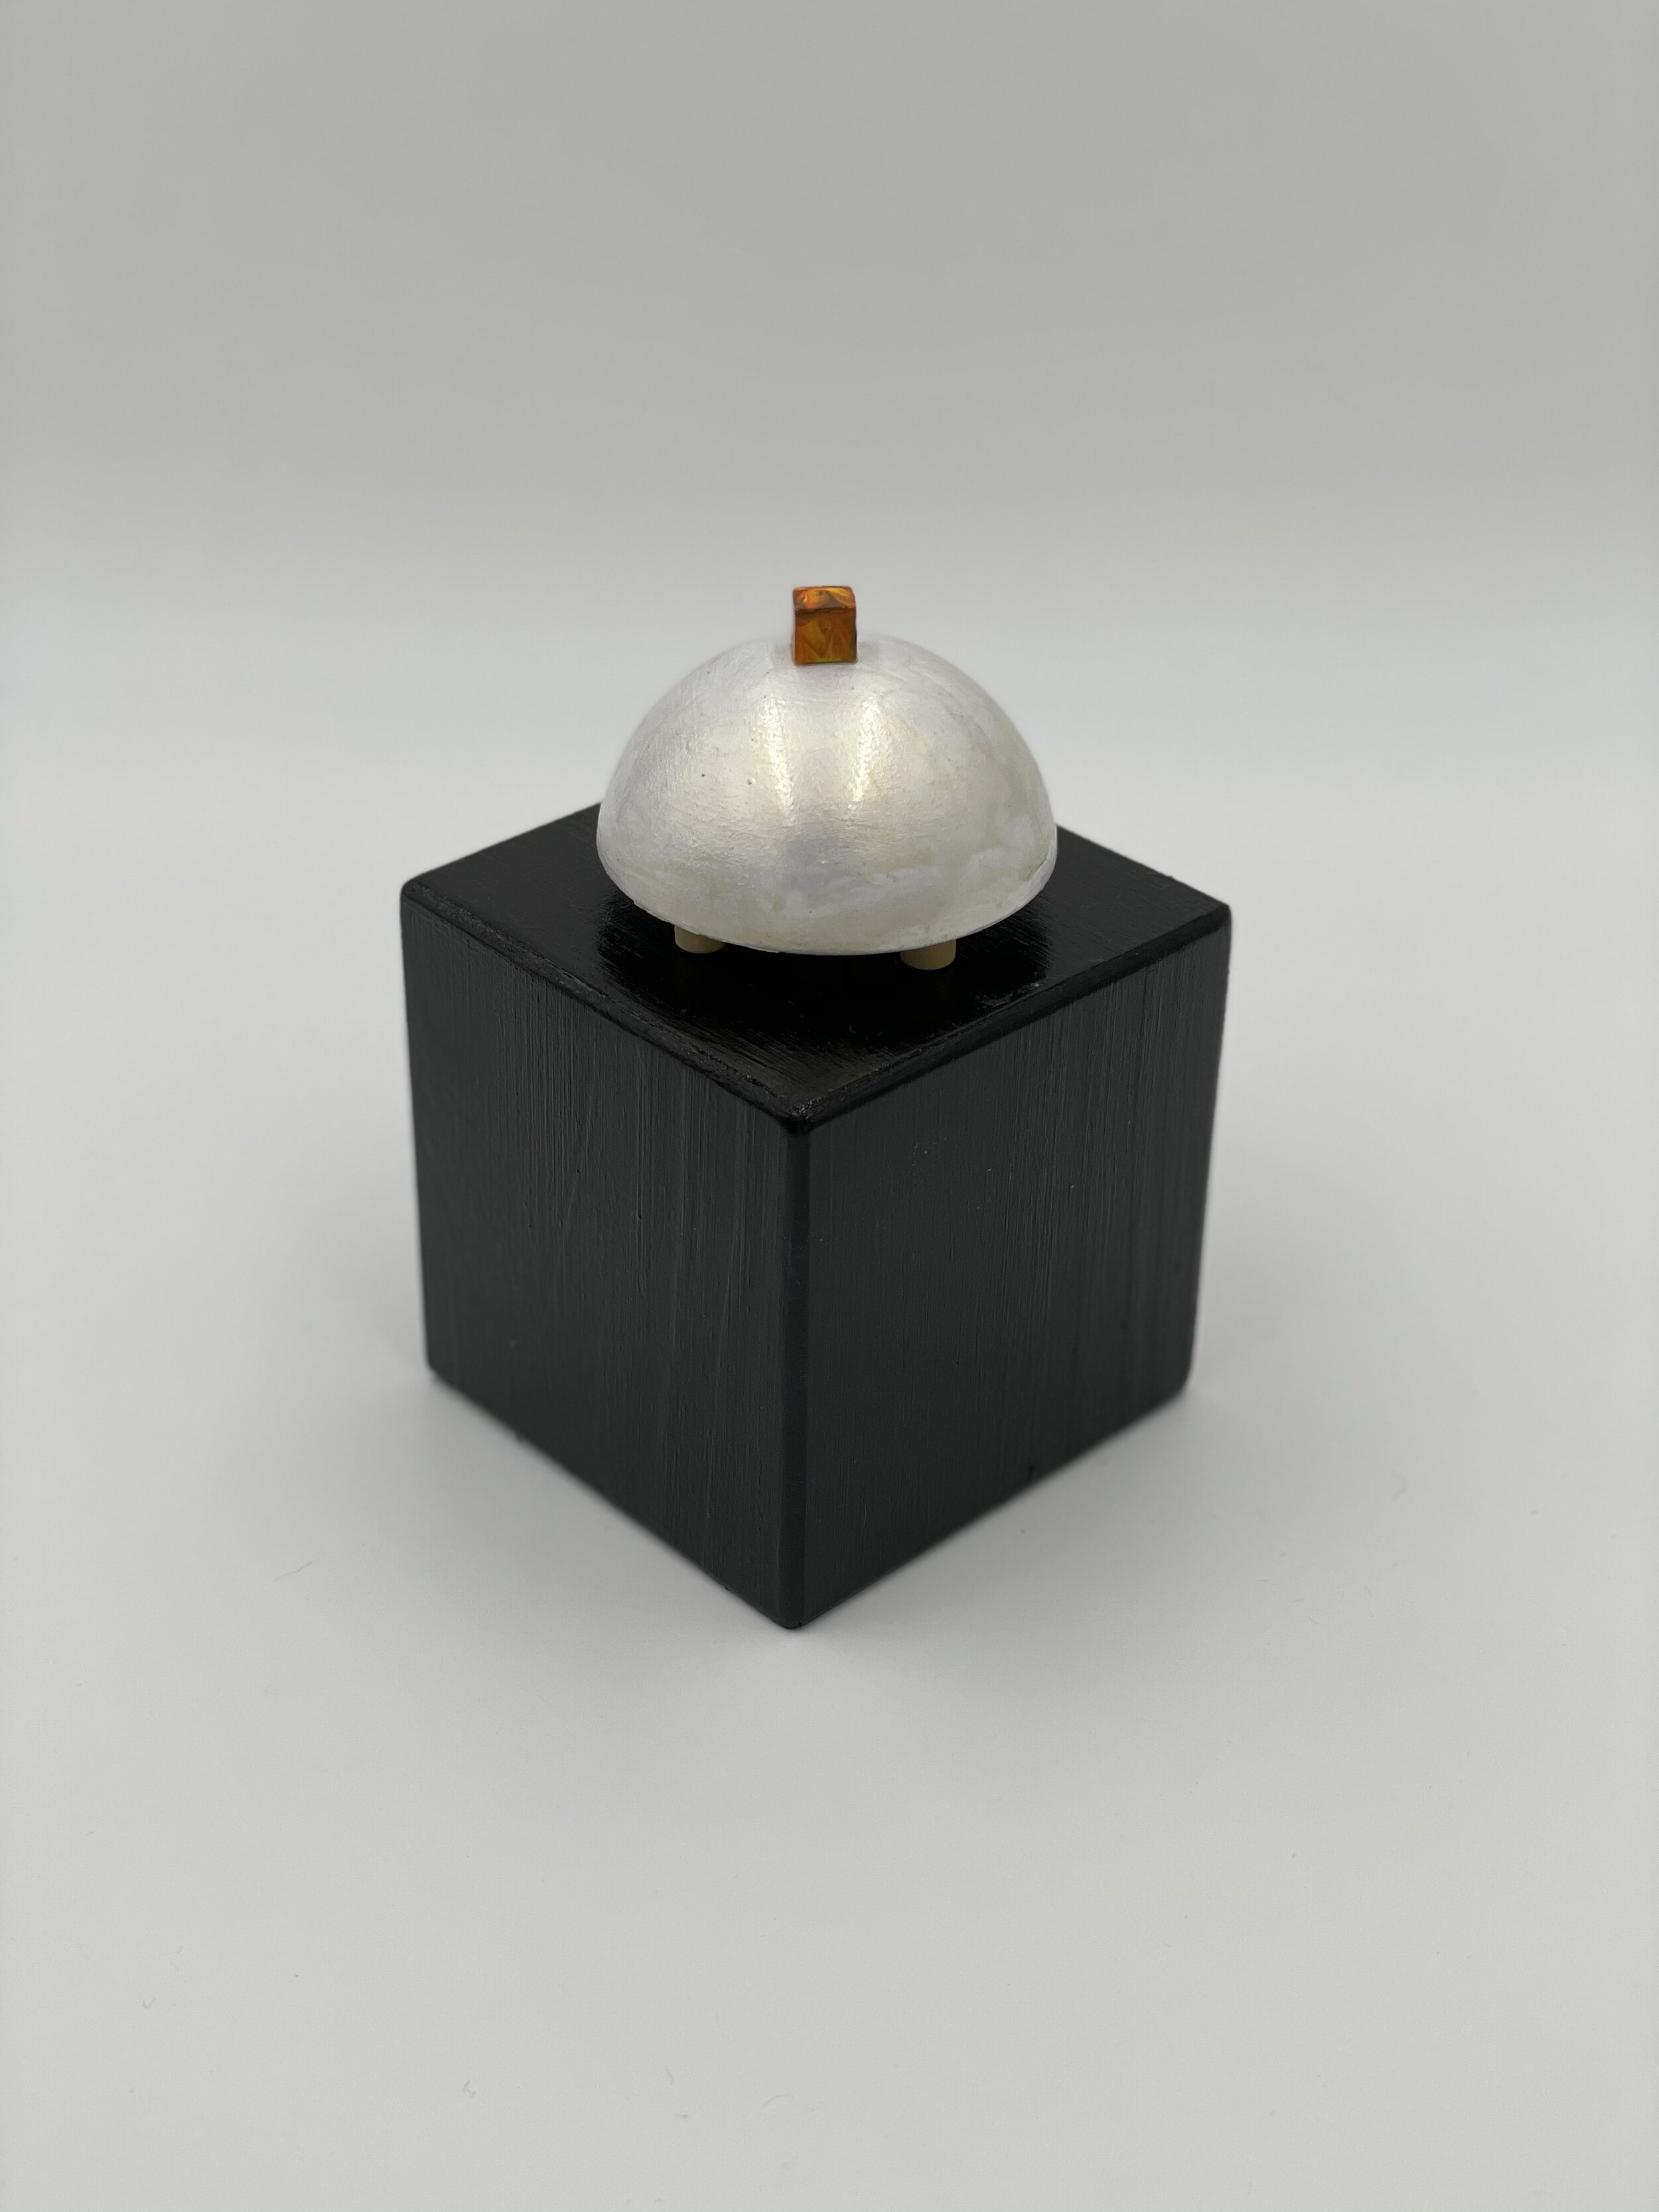 Gold Dome on Black Cube 2020.jpg